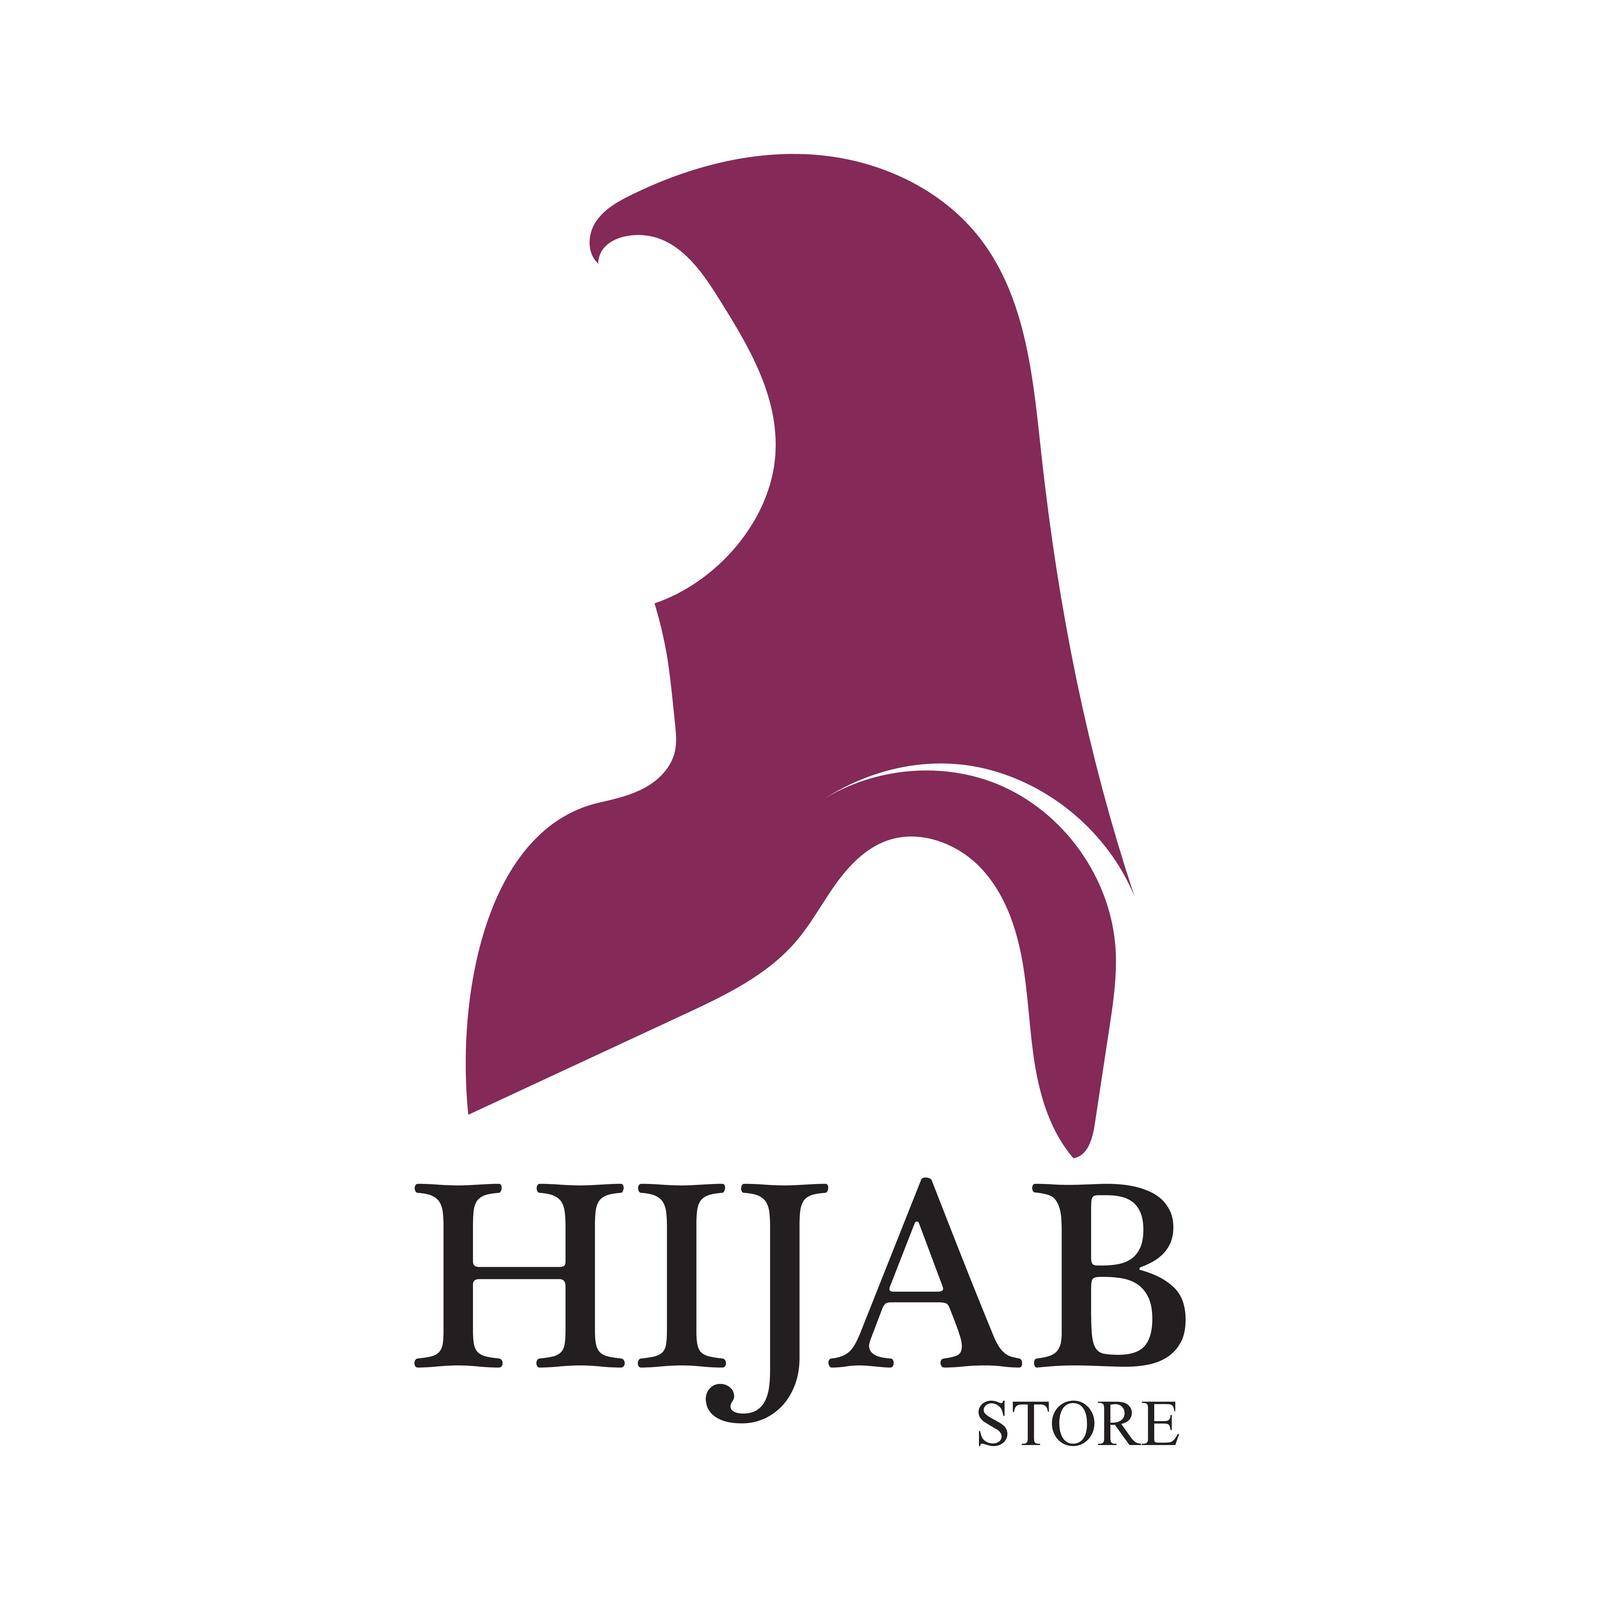 hijab logo vector icon design template by Graphicindo